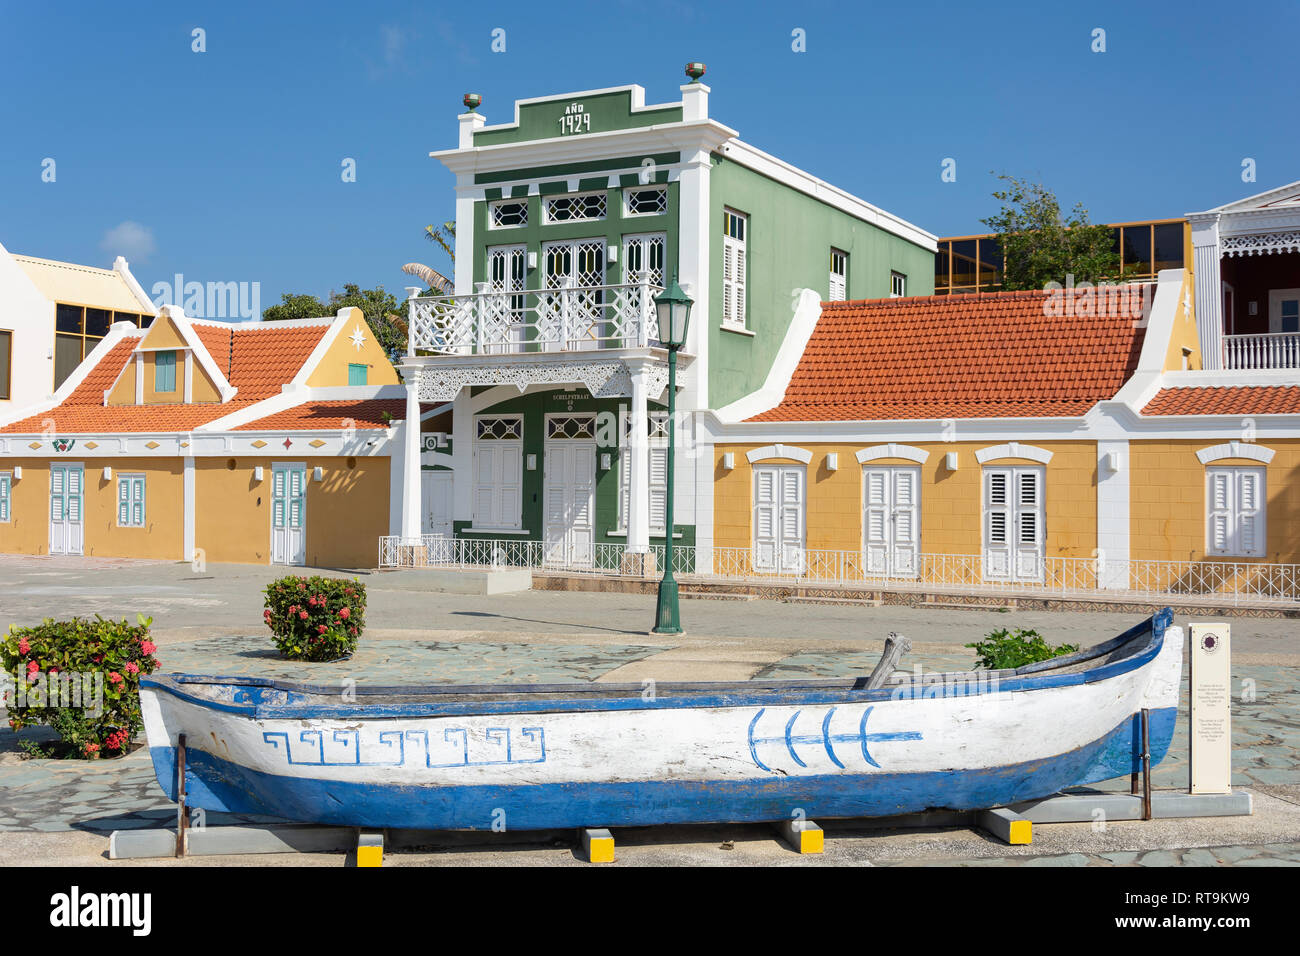 Nationales Archäologisches Museum Aruba, die Schelpstraat, Oranjestad, Aruba, ABC-Inseln, Leeward Antillen, Karibik Stockfoto